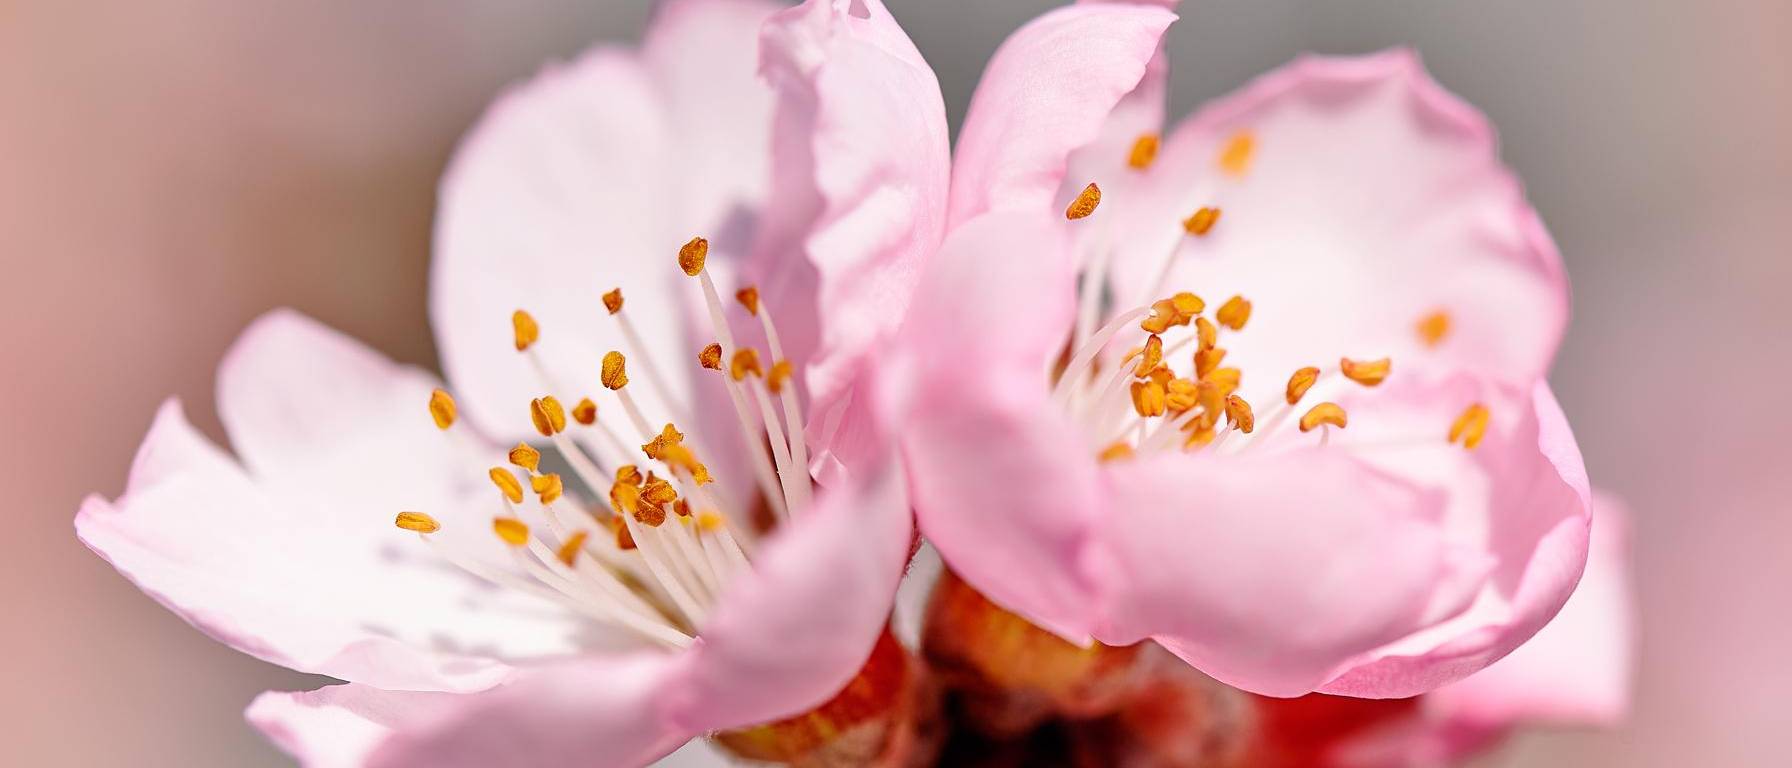 Image of almond petals